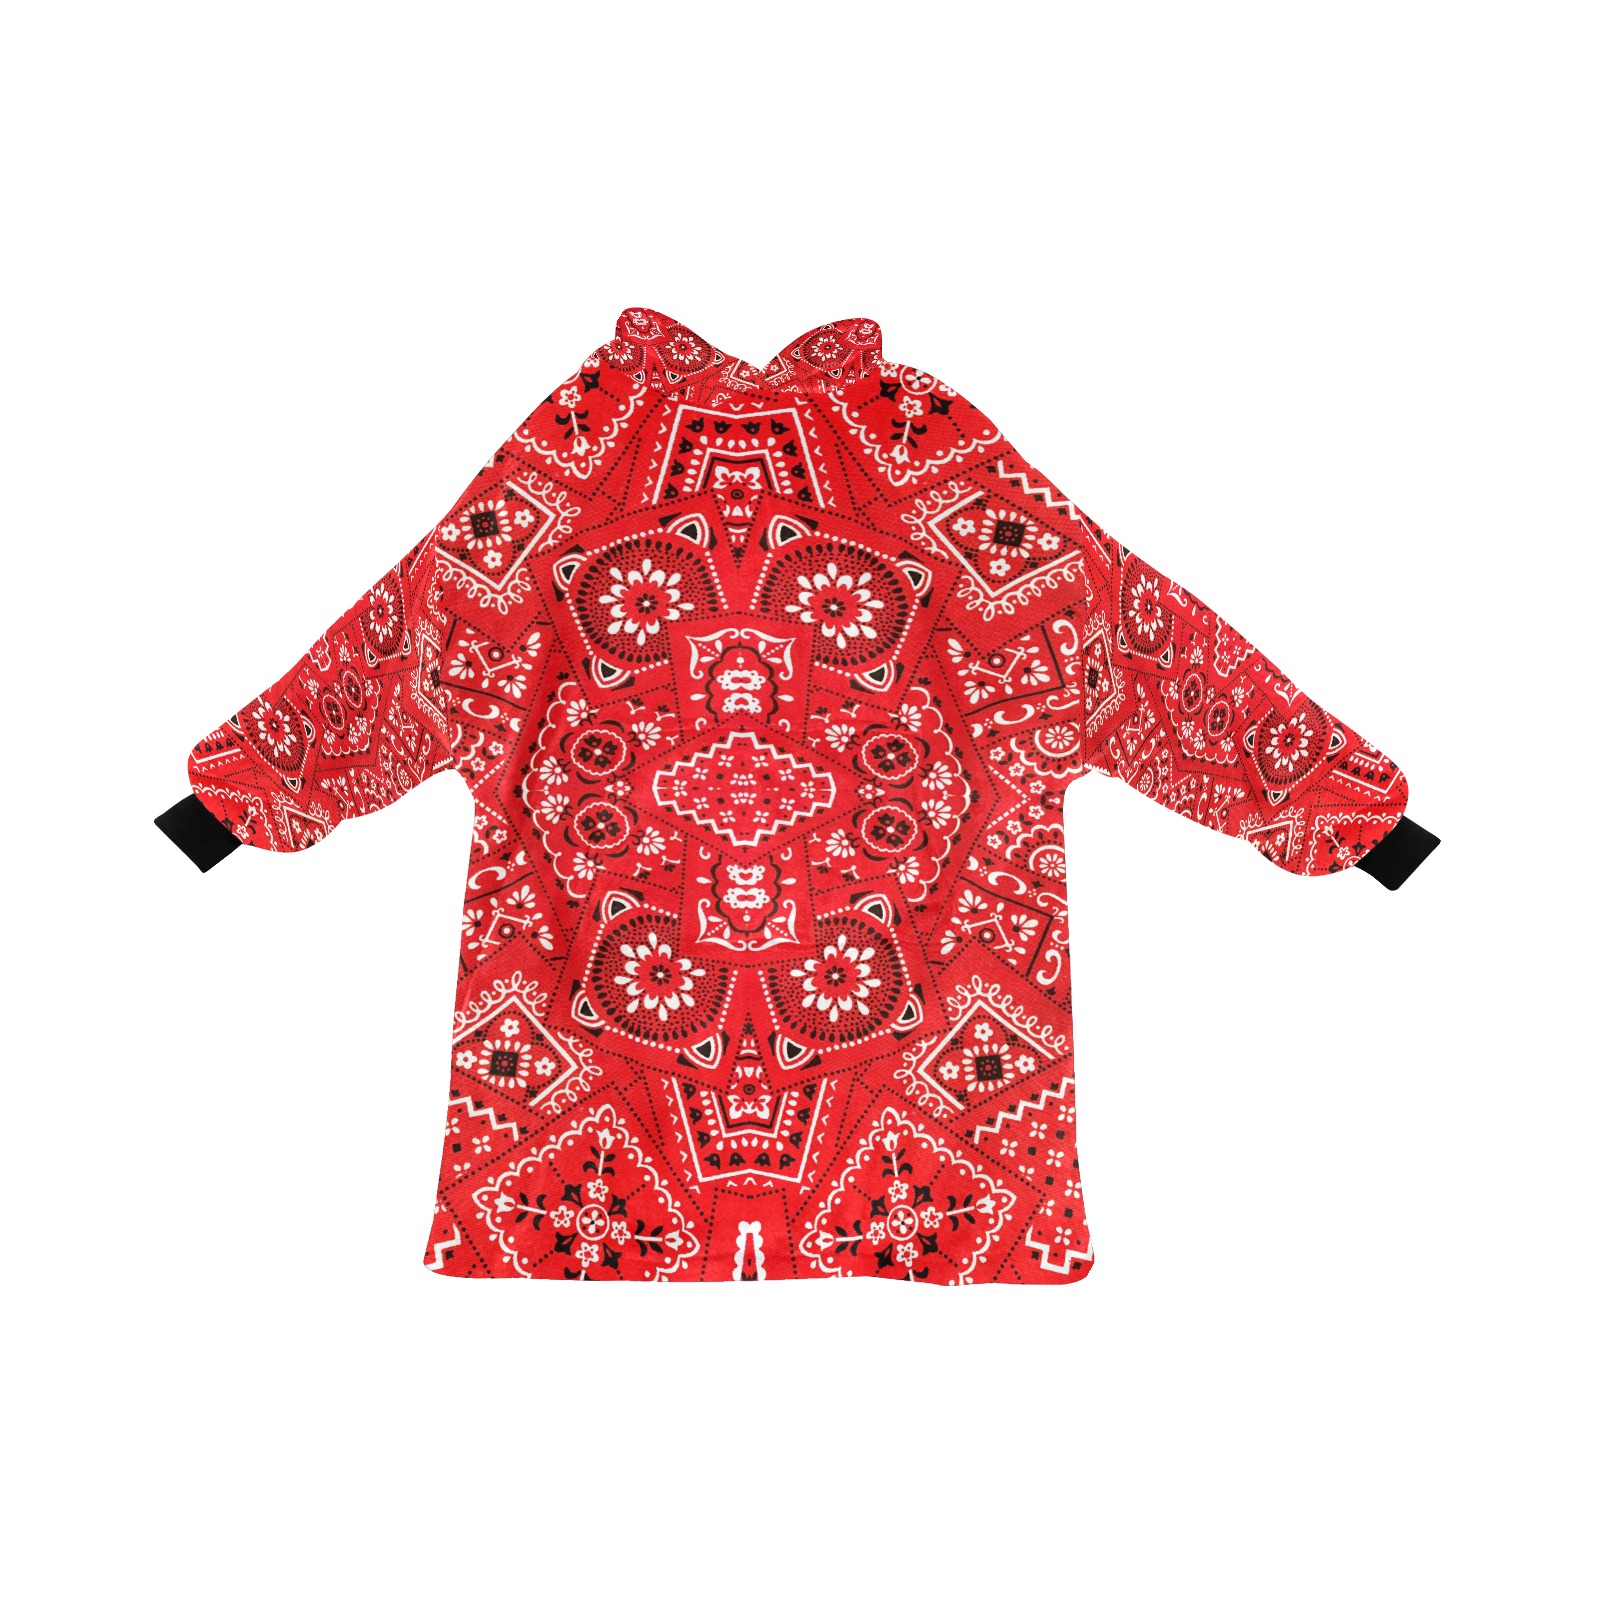 Red Bandana Squares / Black Cuff Blanket Hoodie for Men